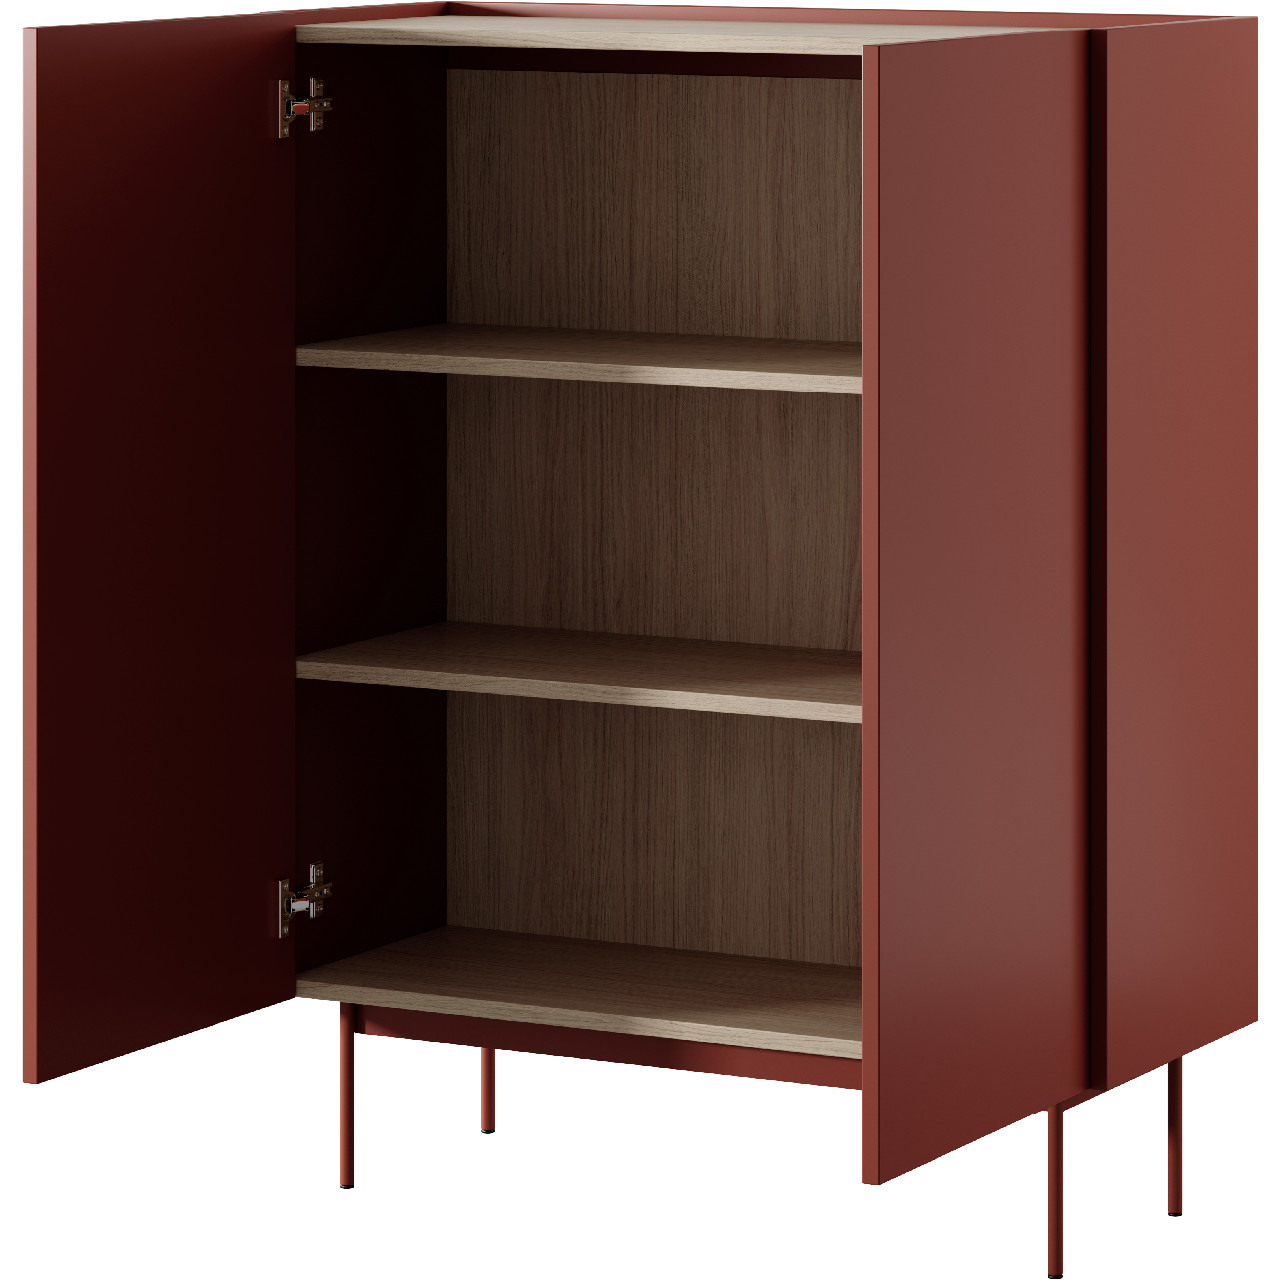 Storage cabinet COLOUR 03 ceramic red / linea oak